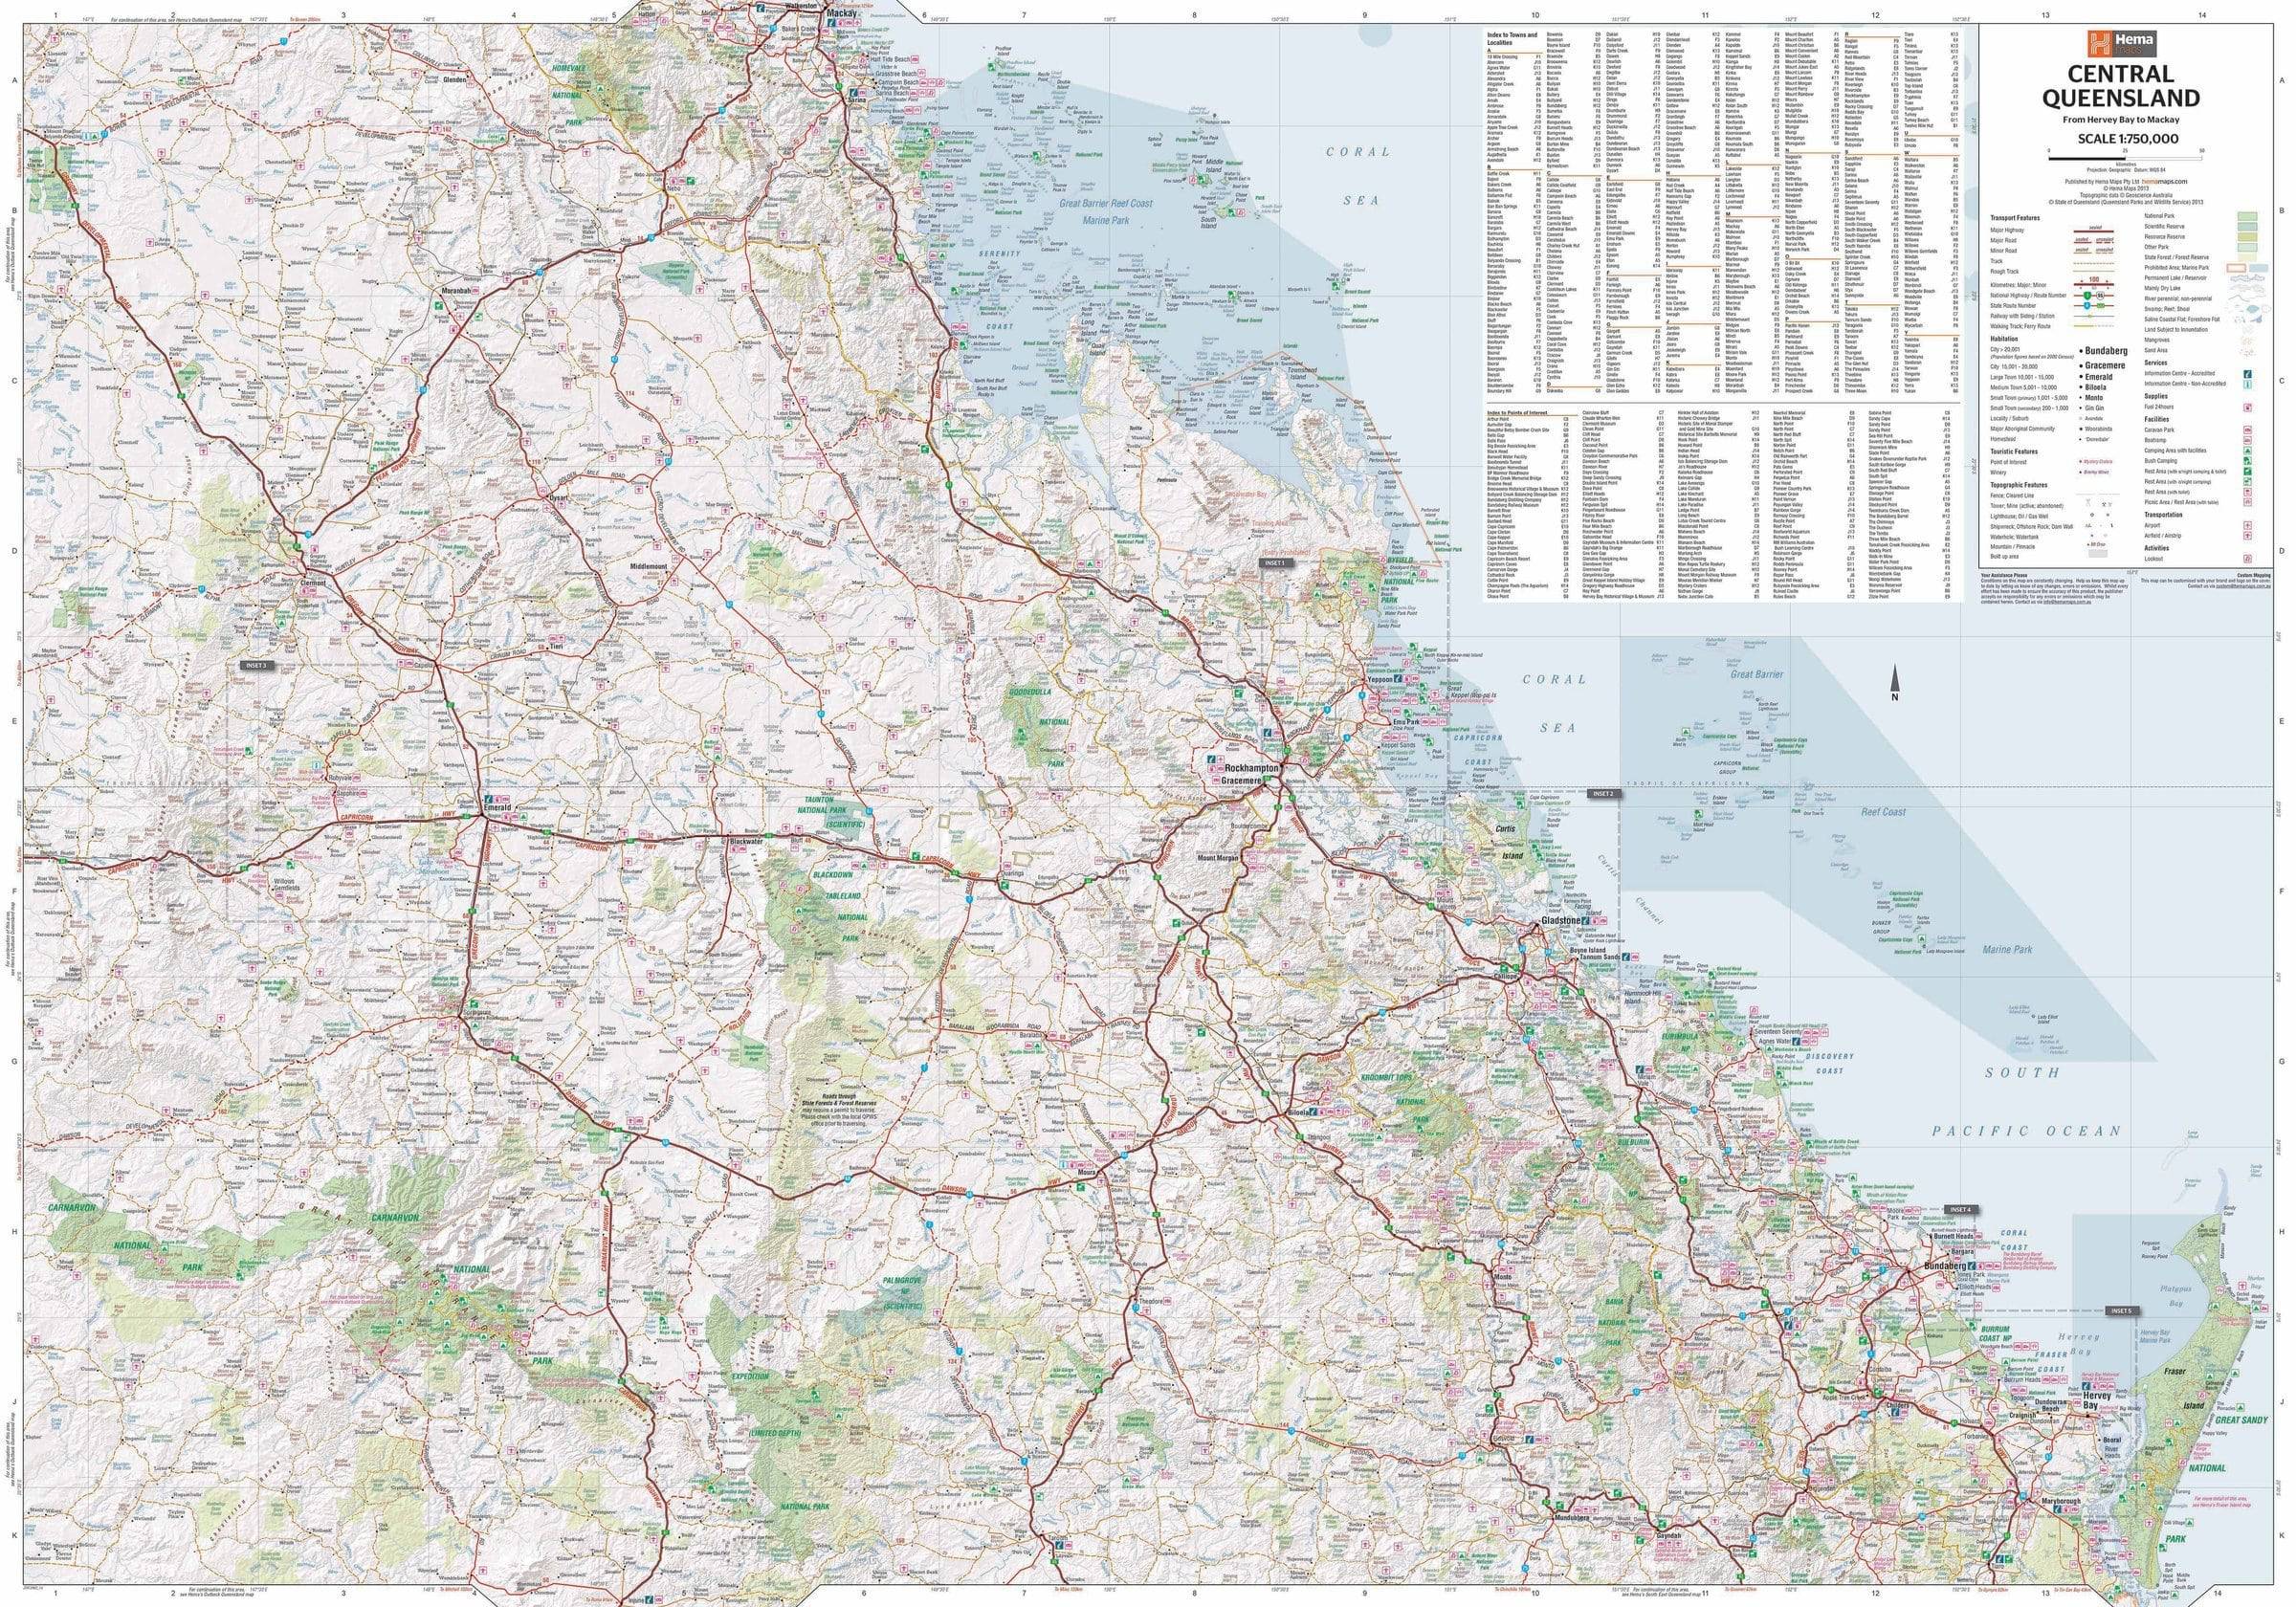 Hema Central Queensland Map | Hema